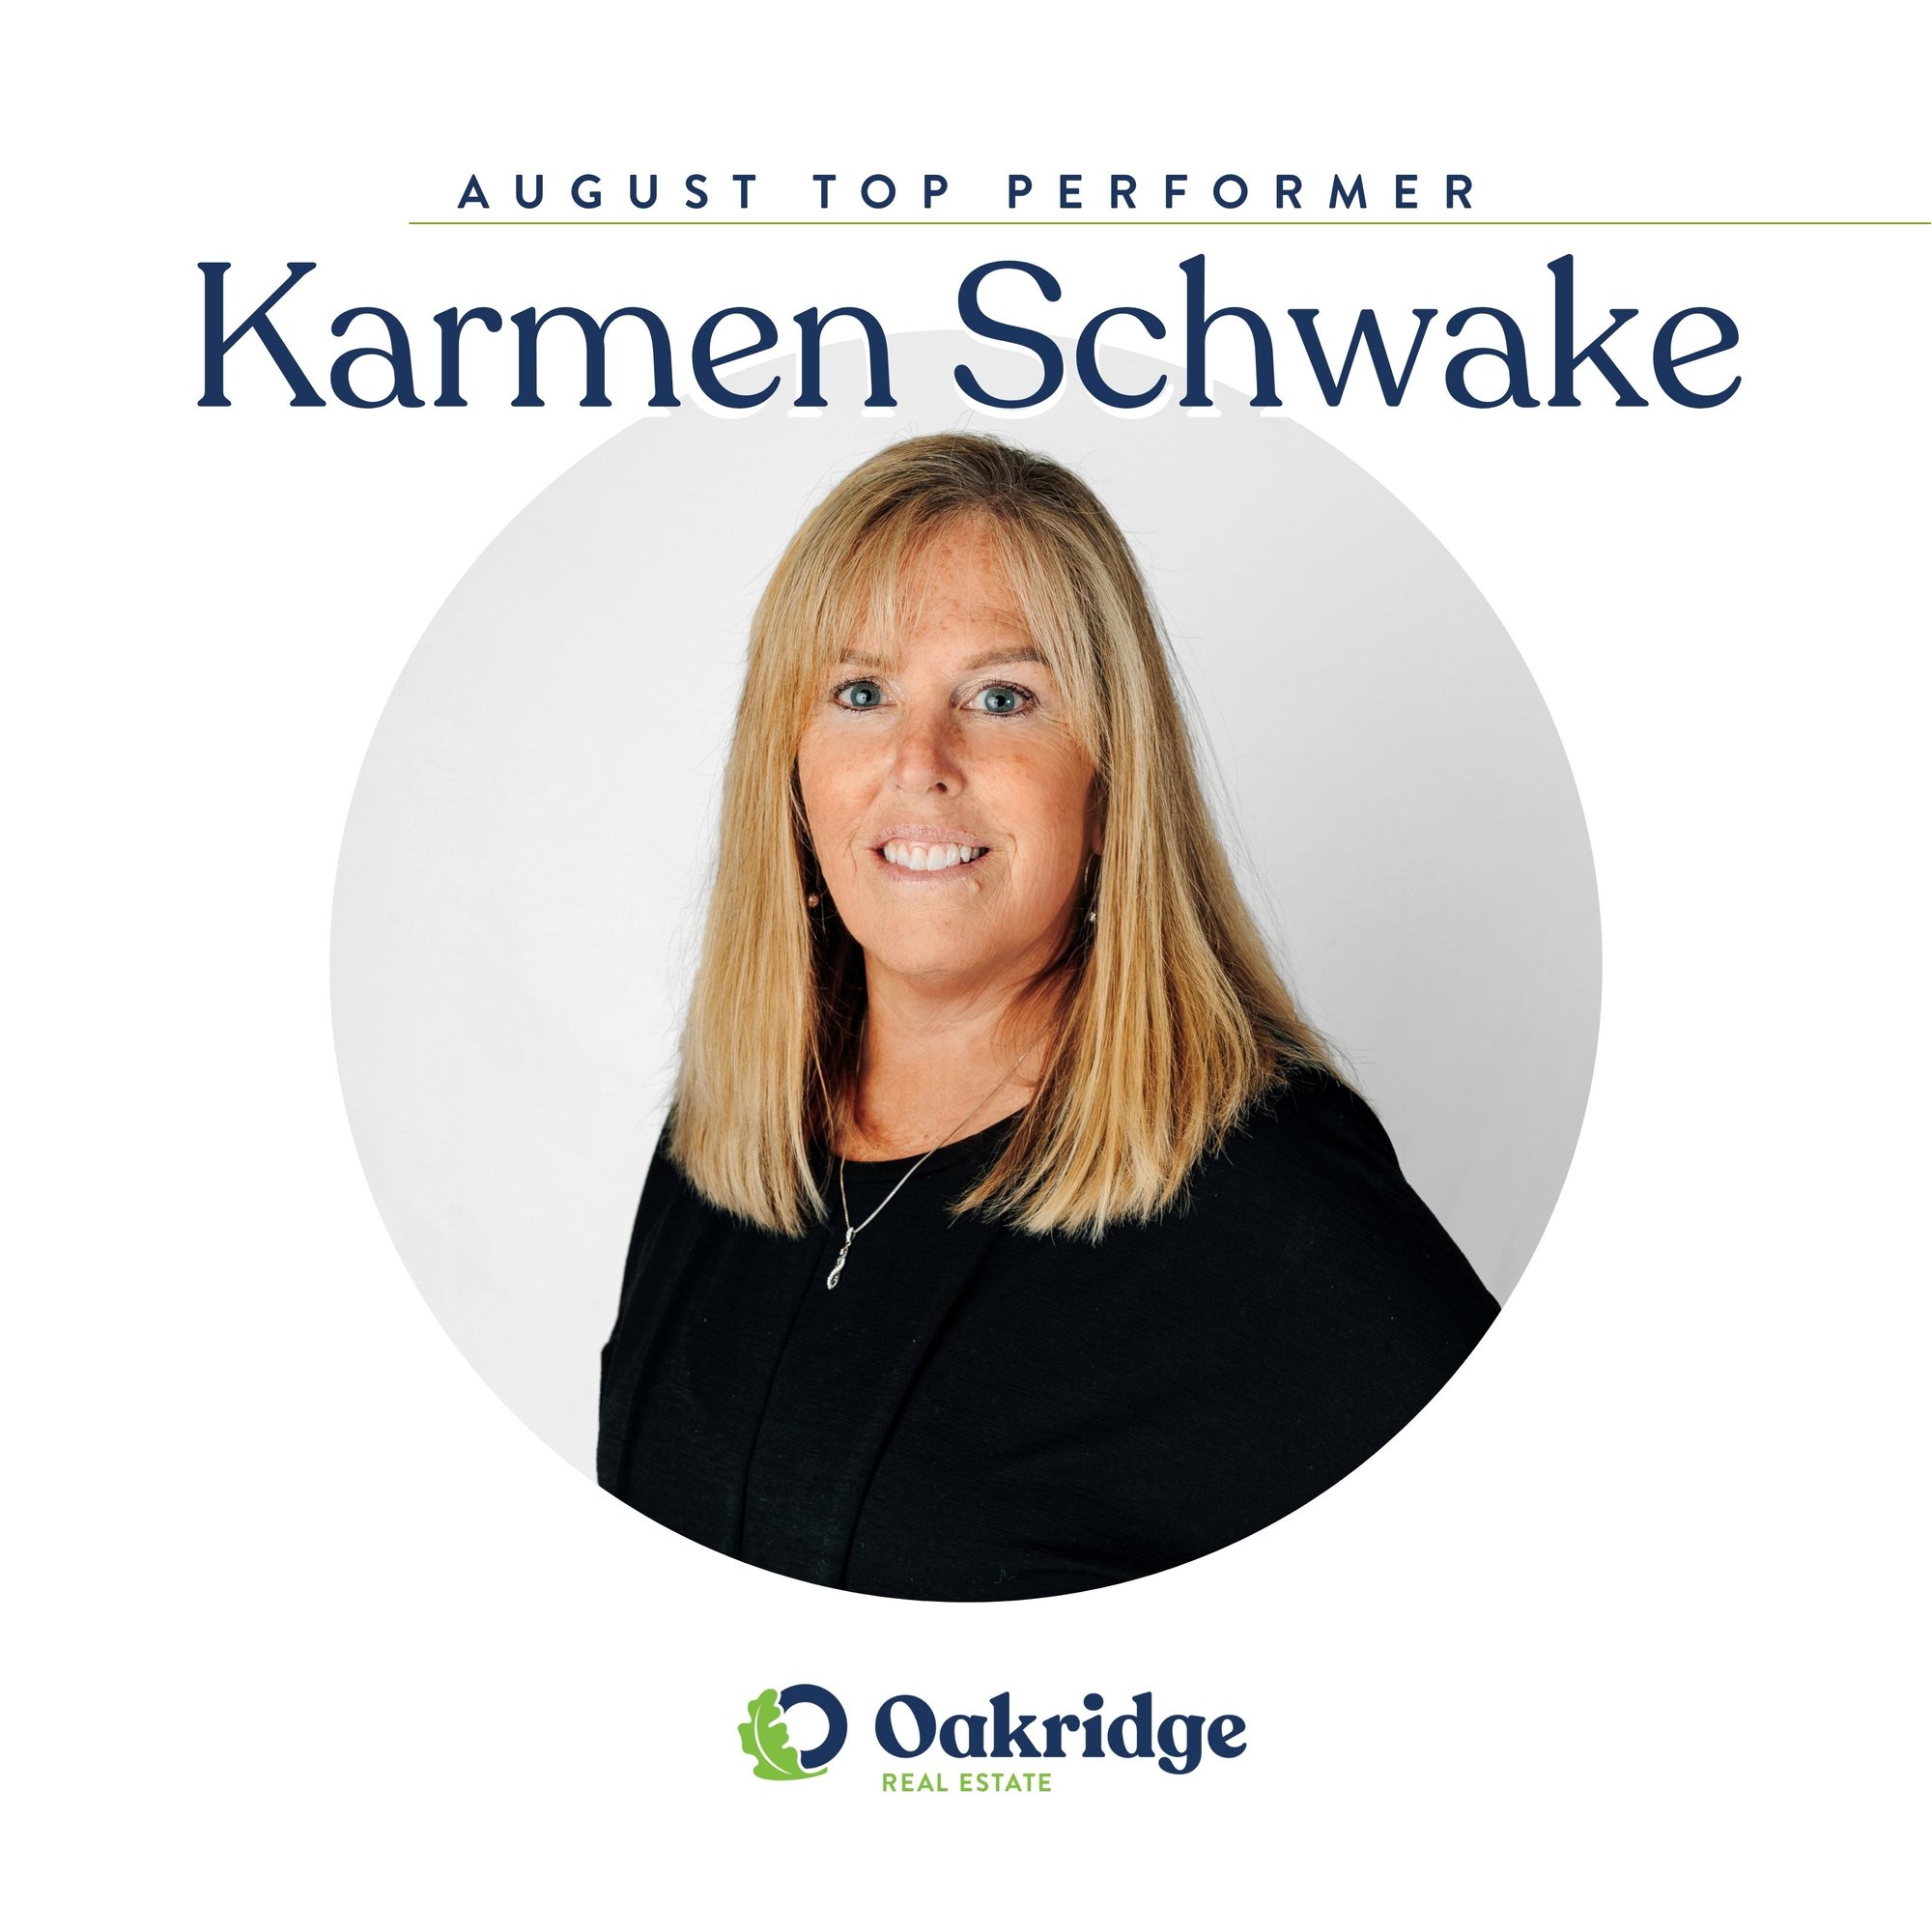 Karmen Schwake Oakridge Real Estate Top Performer